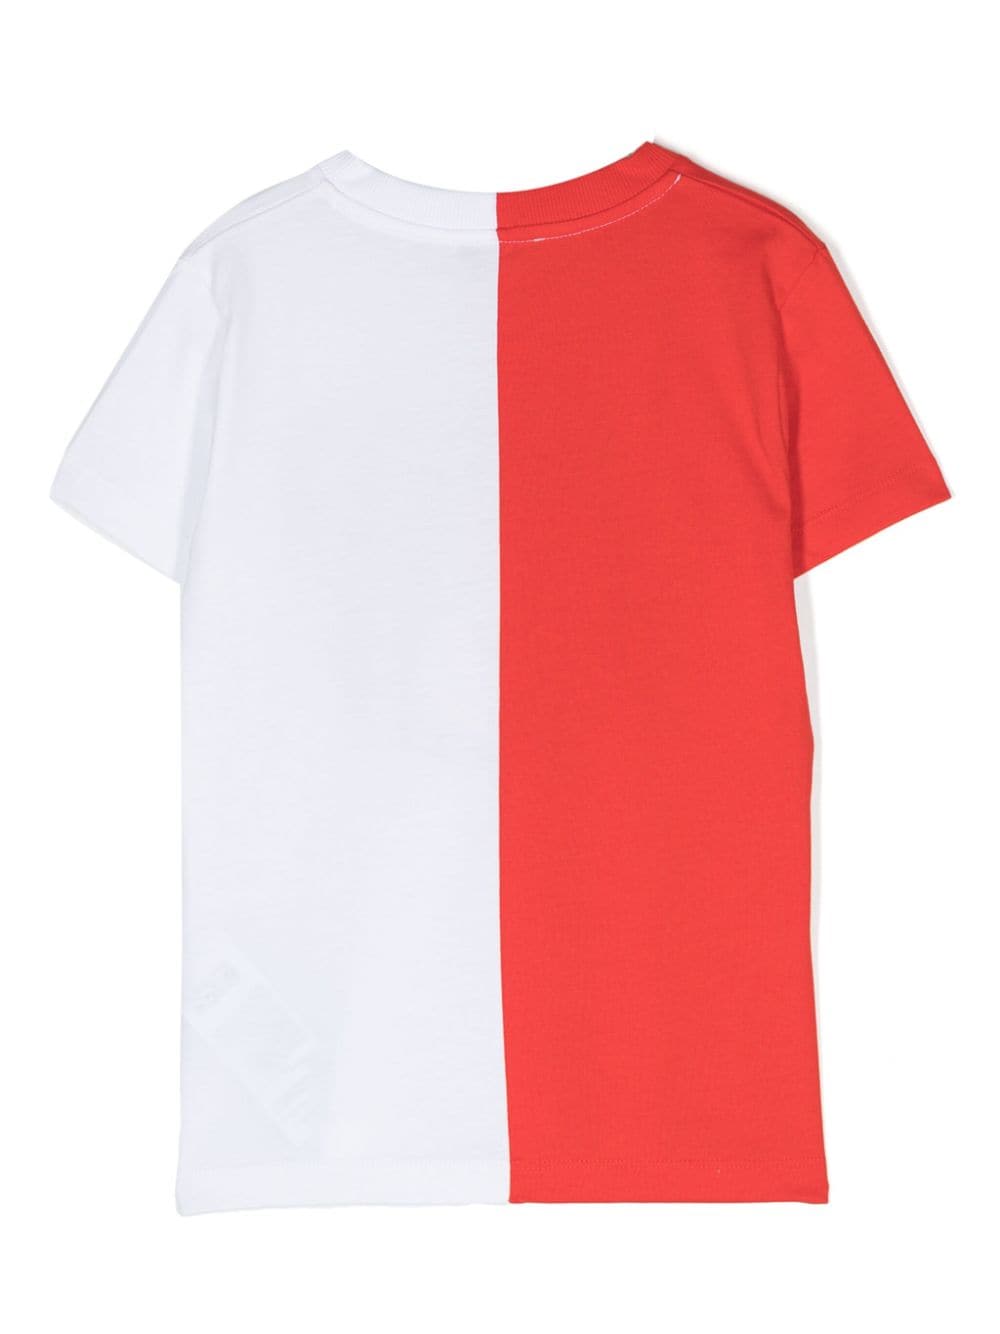 T-shirt rossa e bianca per bambino con logo